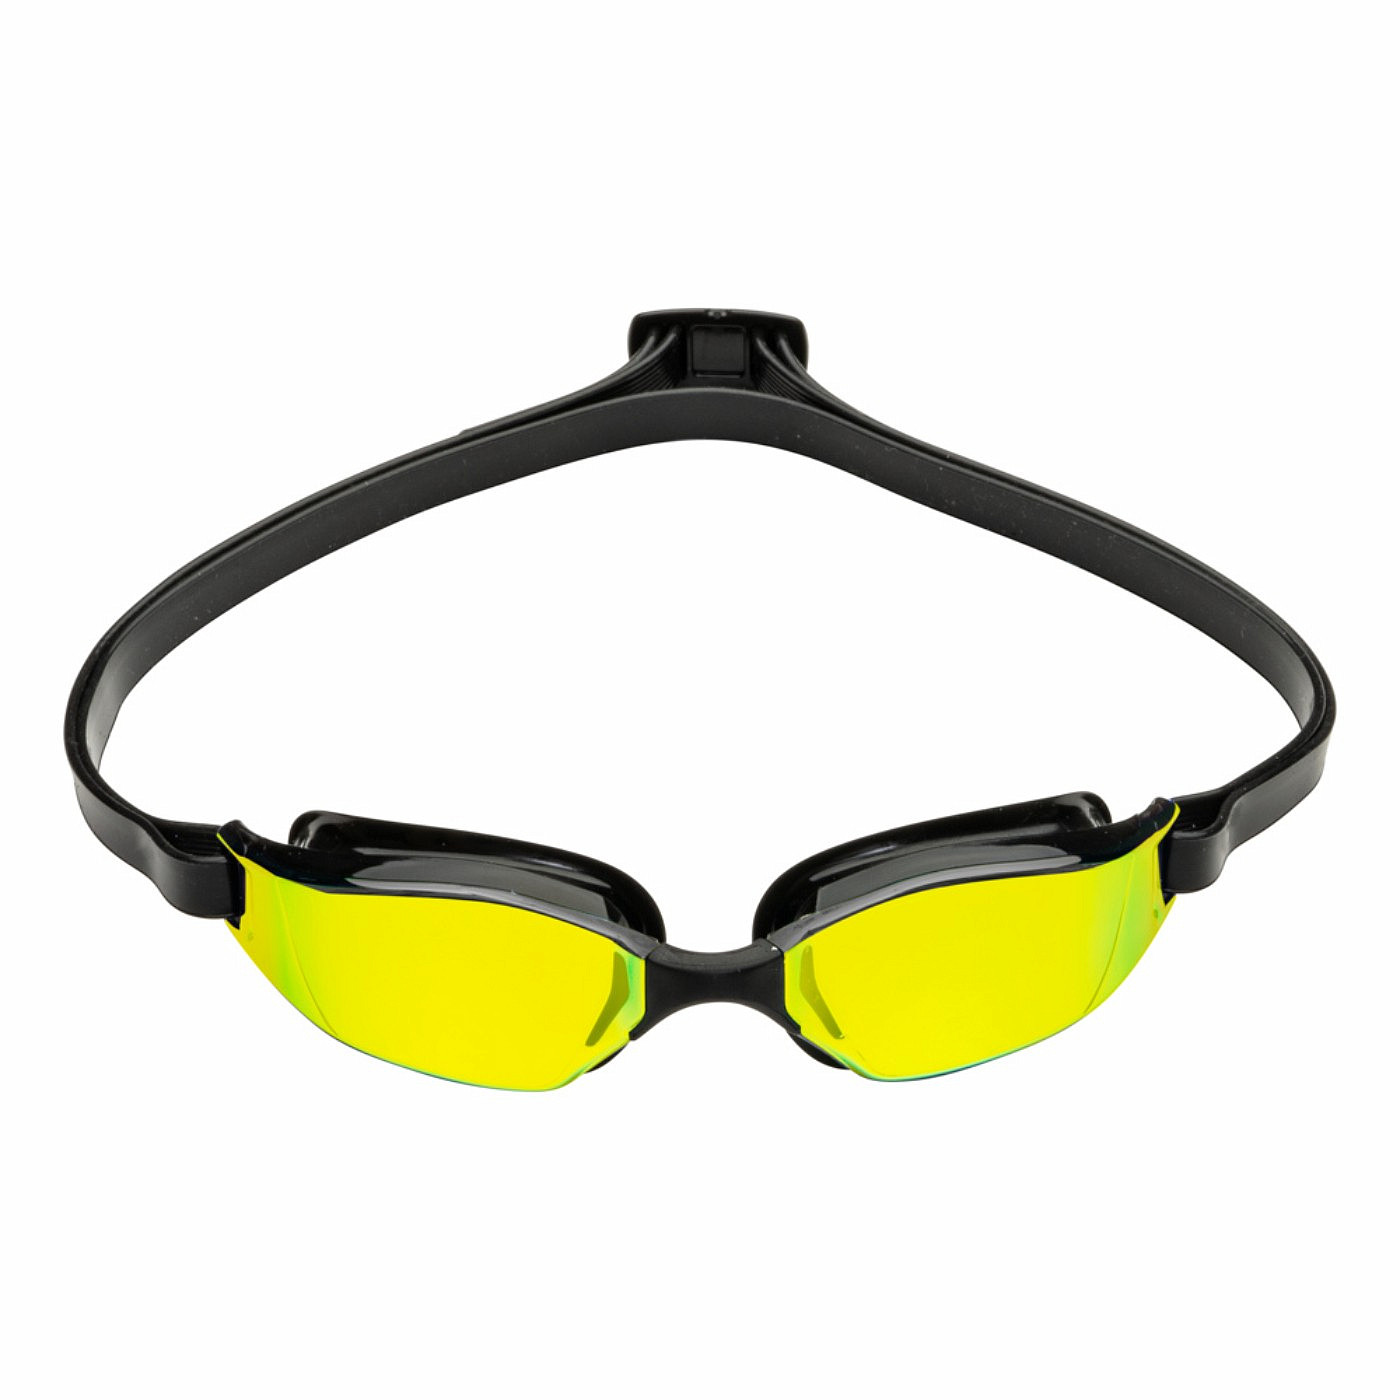 Anti-fog product SEA-CLR  Maintenance of swimming goggles